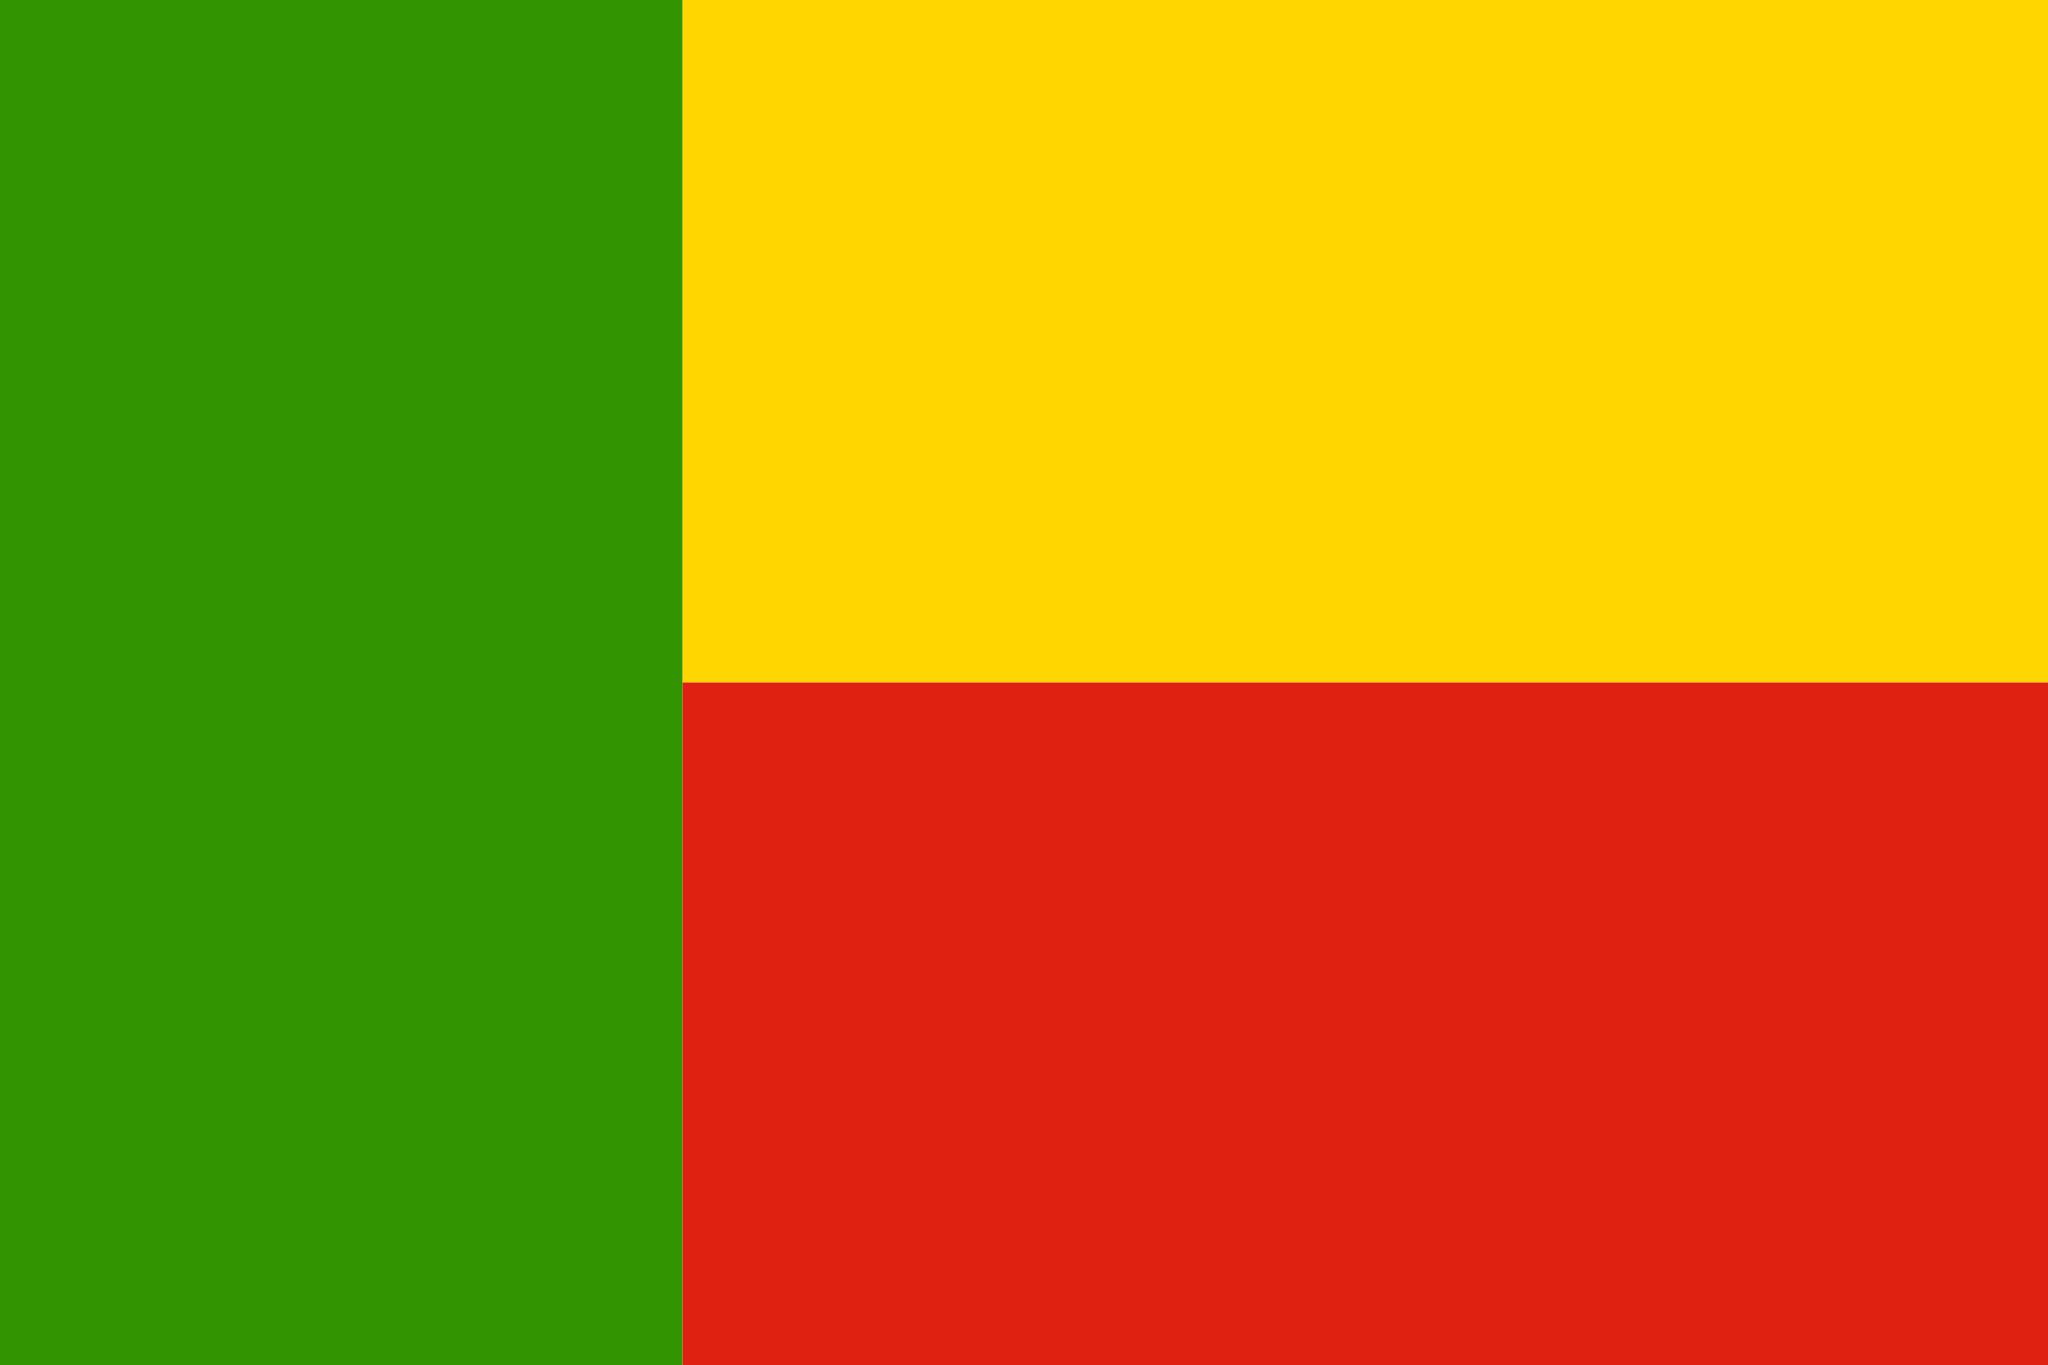 Бенин флаг